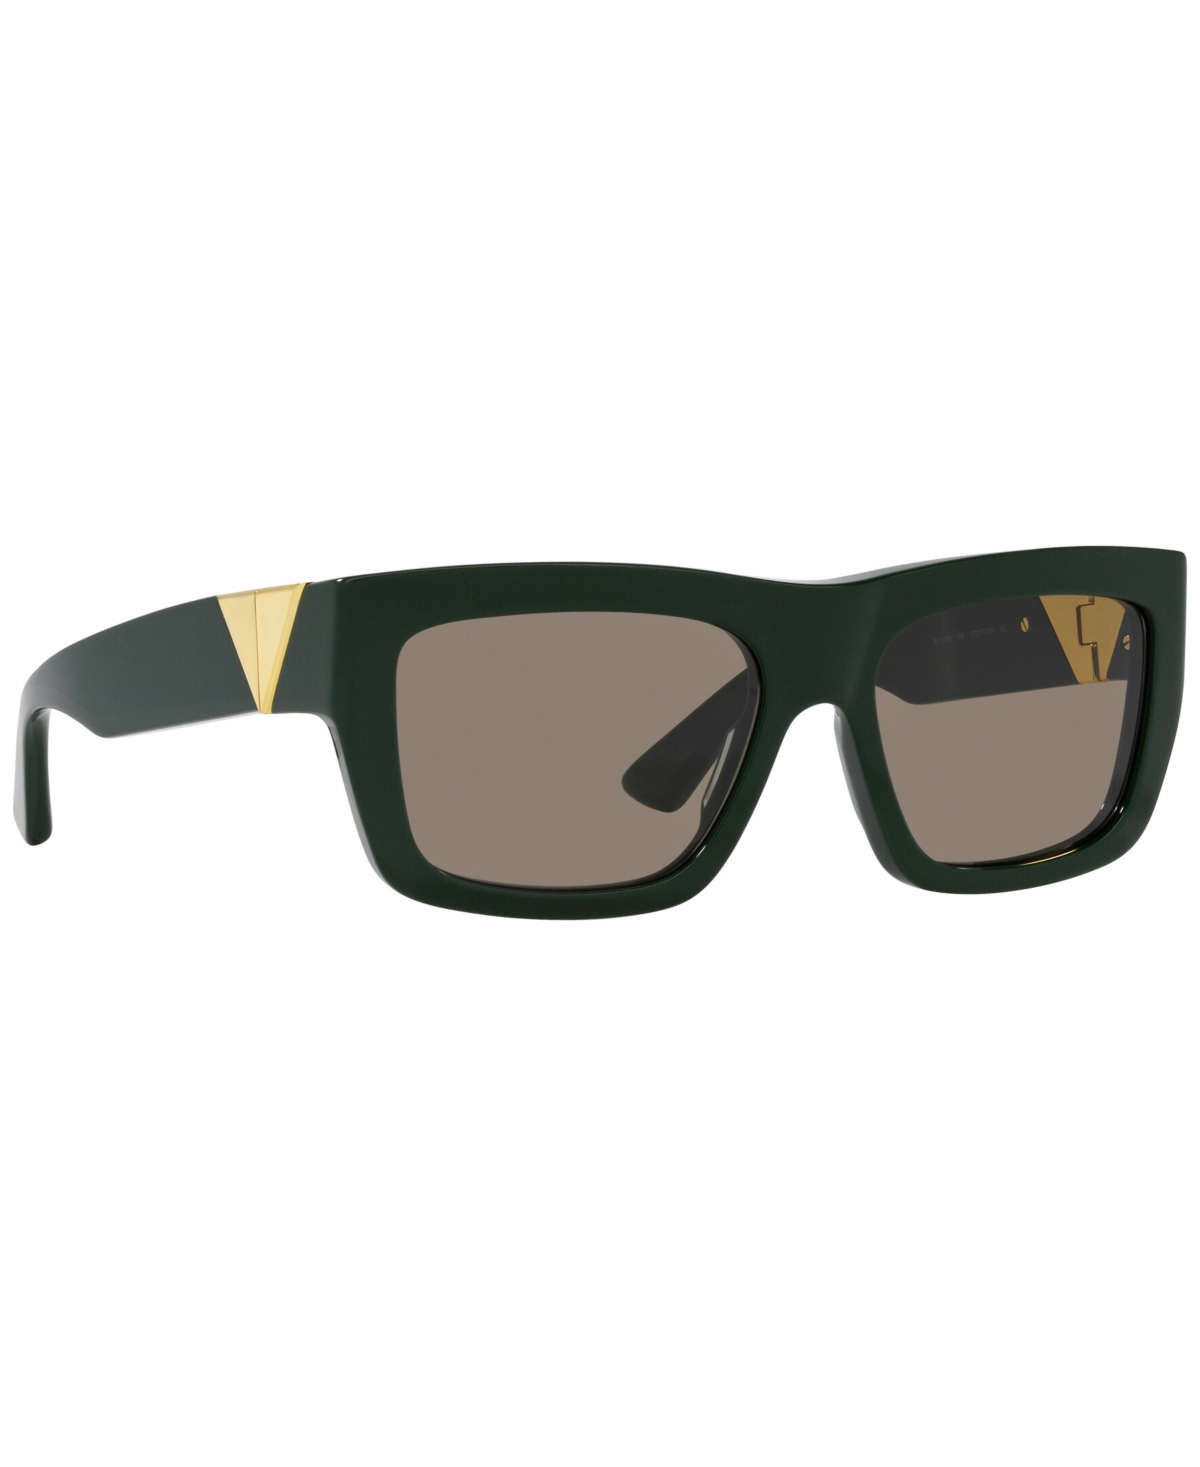 Bottega Veneta Women's Sunglasses, Bv1178s In Green